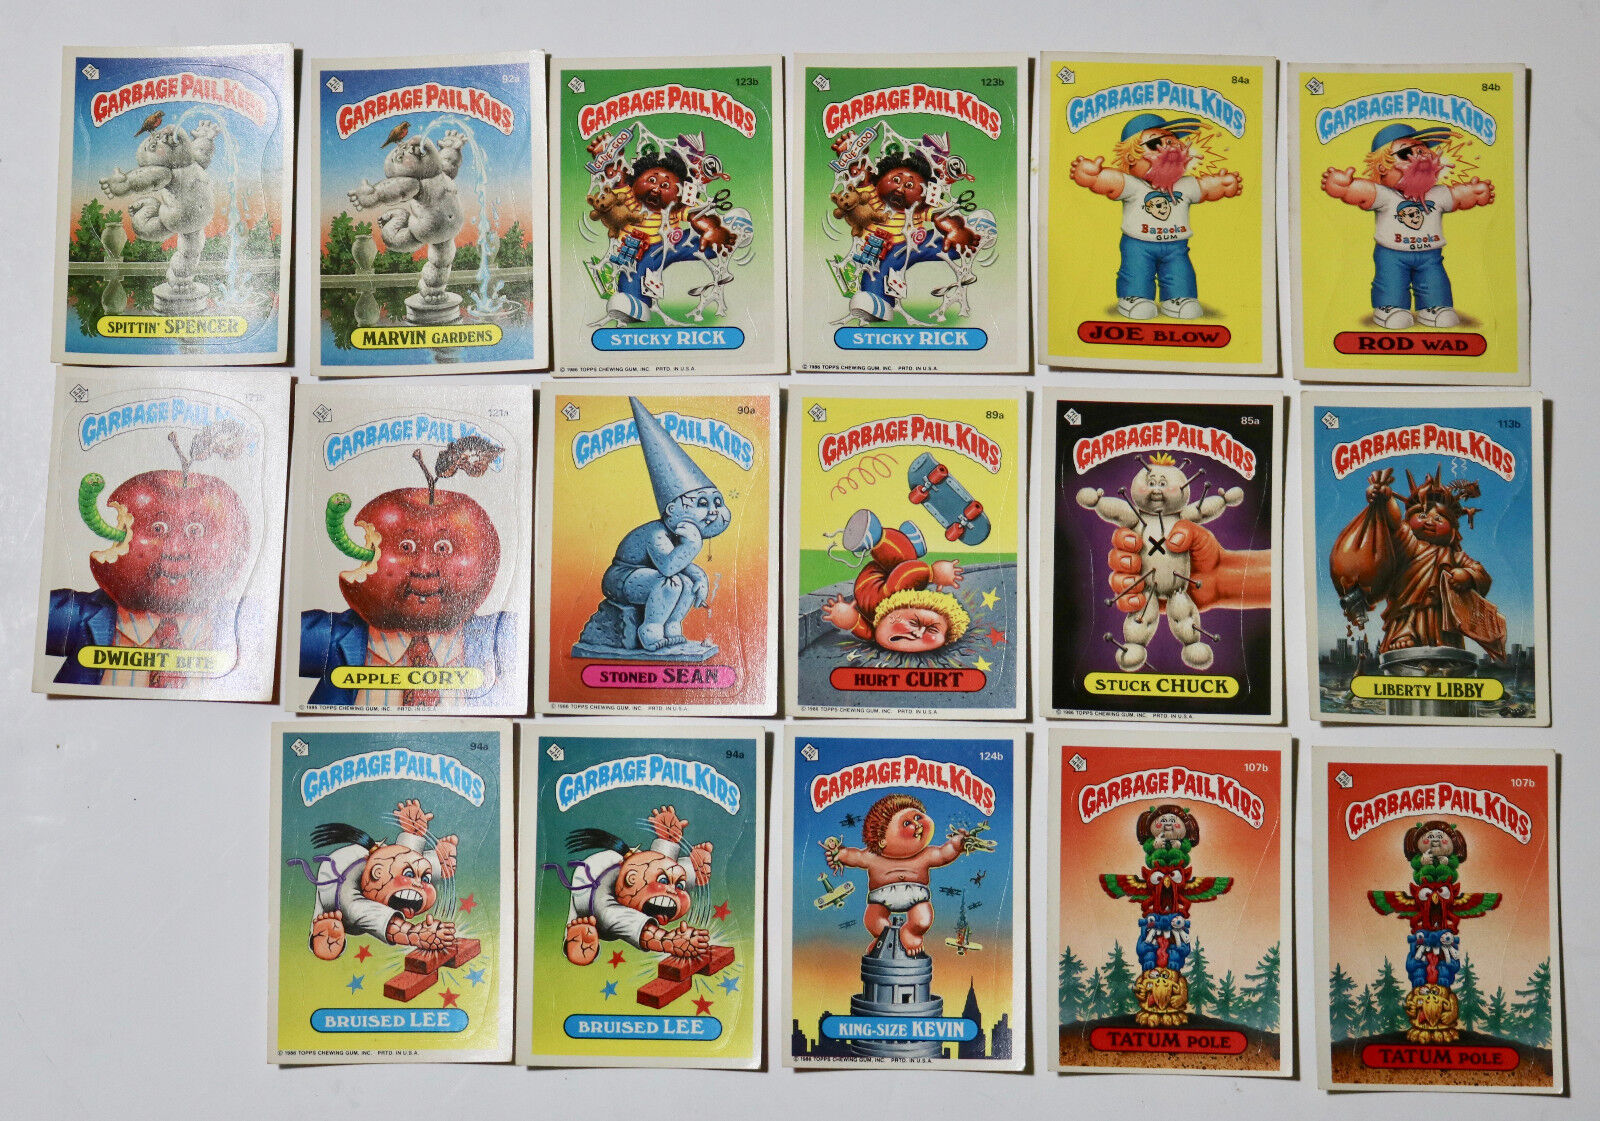 Garbage Pail Kids Topps 1986 sticker cards lot of 17